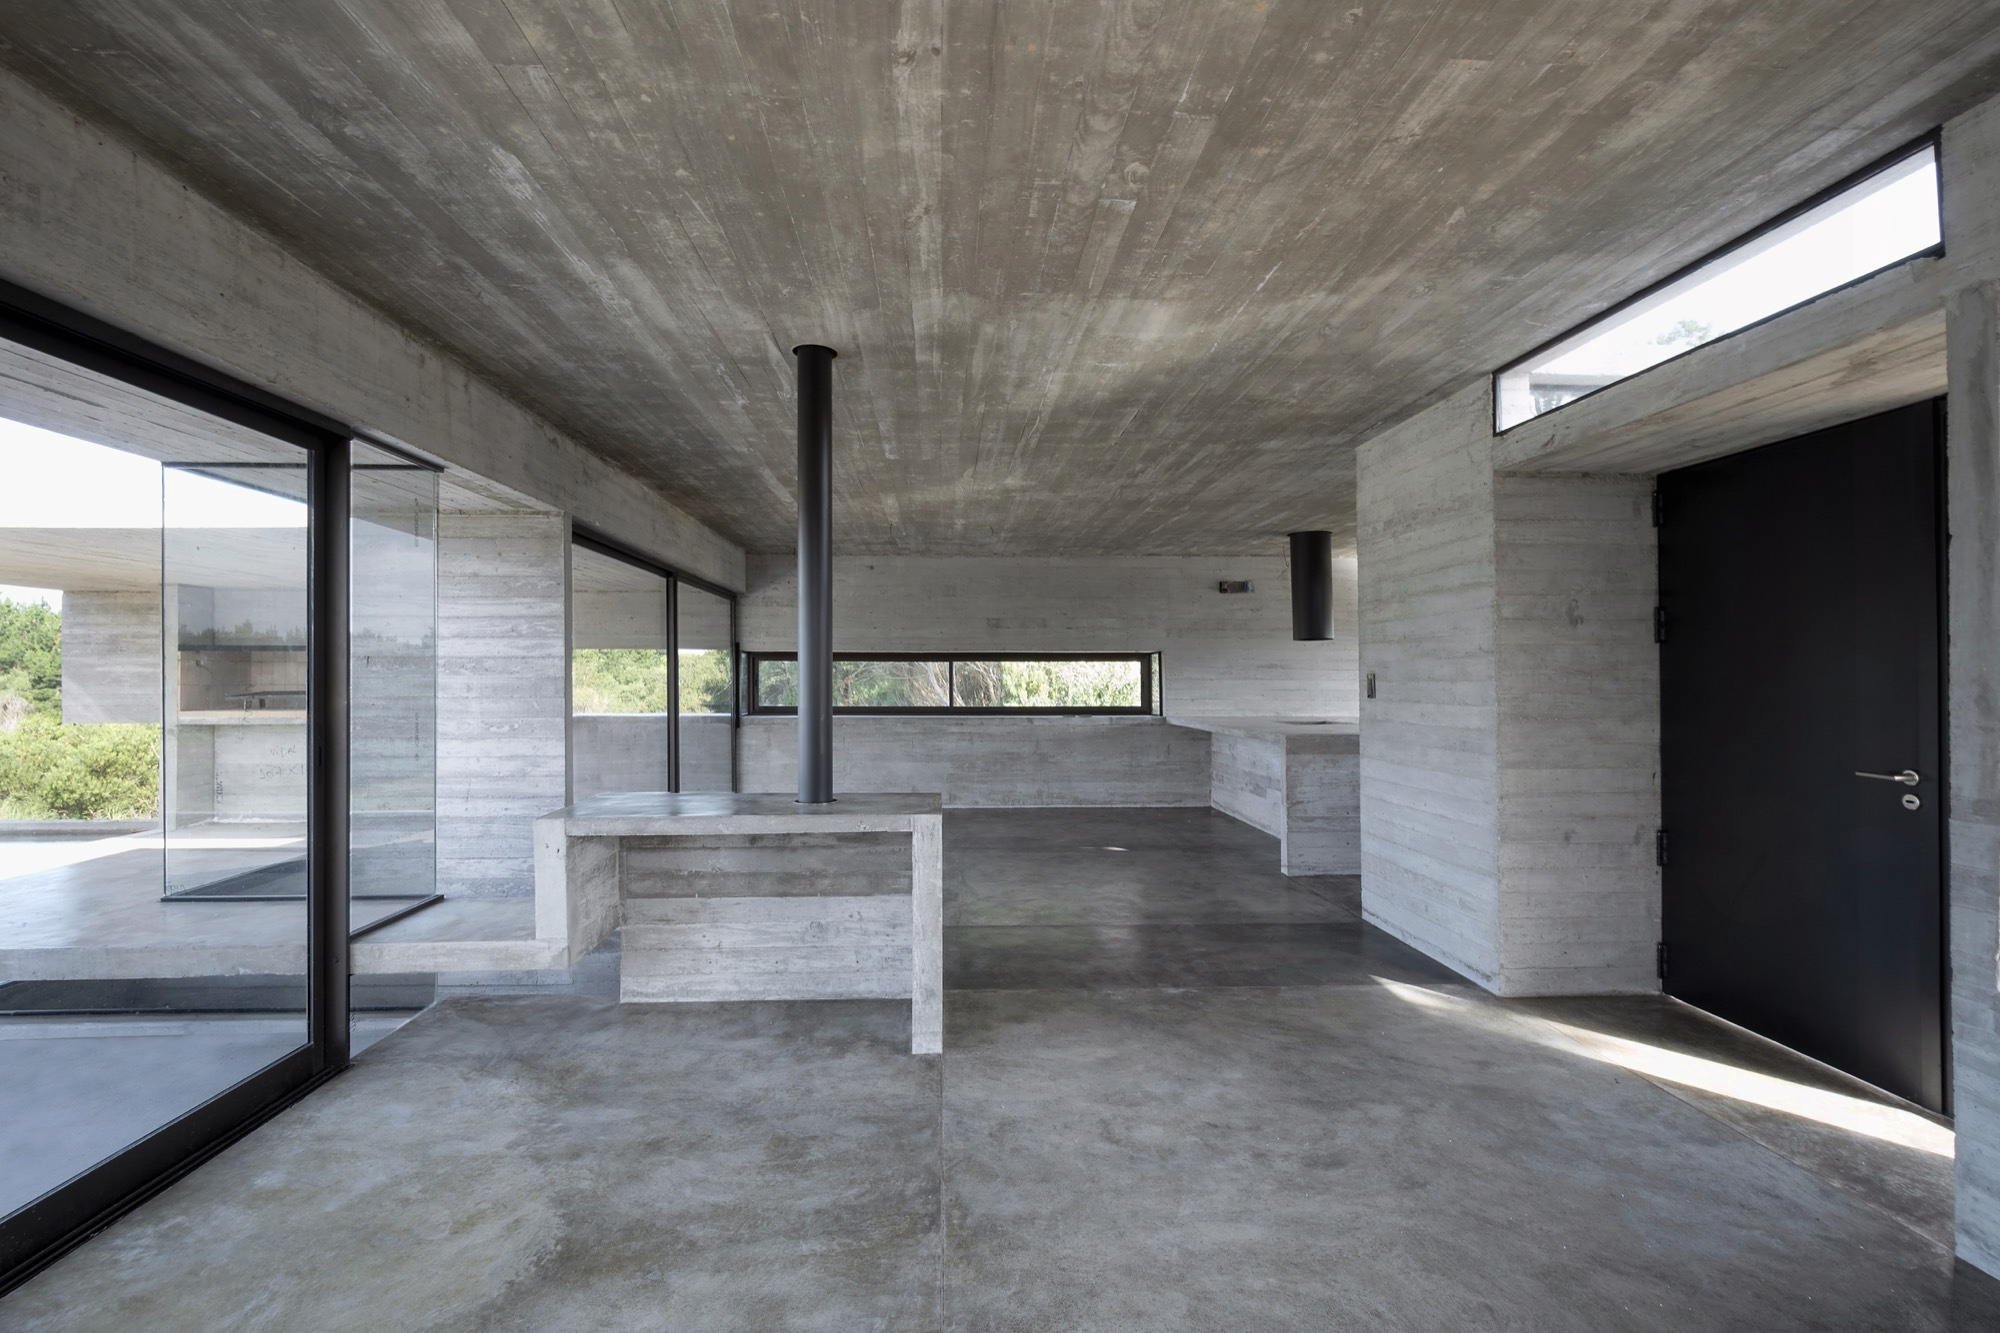 Concrete бетон. Лучано Крук Архитектор. Пол стена бетон. "The Concrete House" в Бразилии. Эко-брутализм экстерьер.